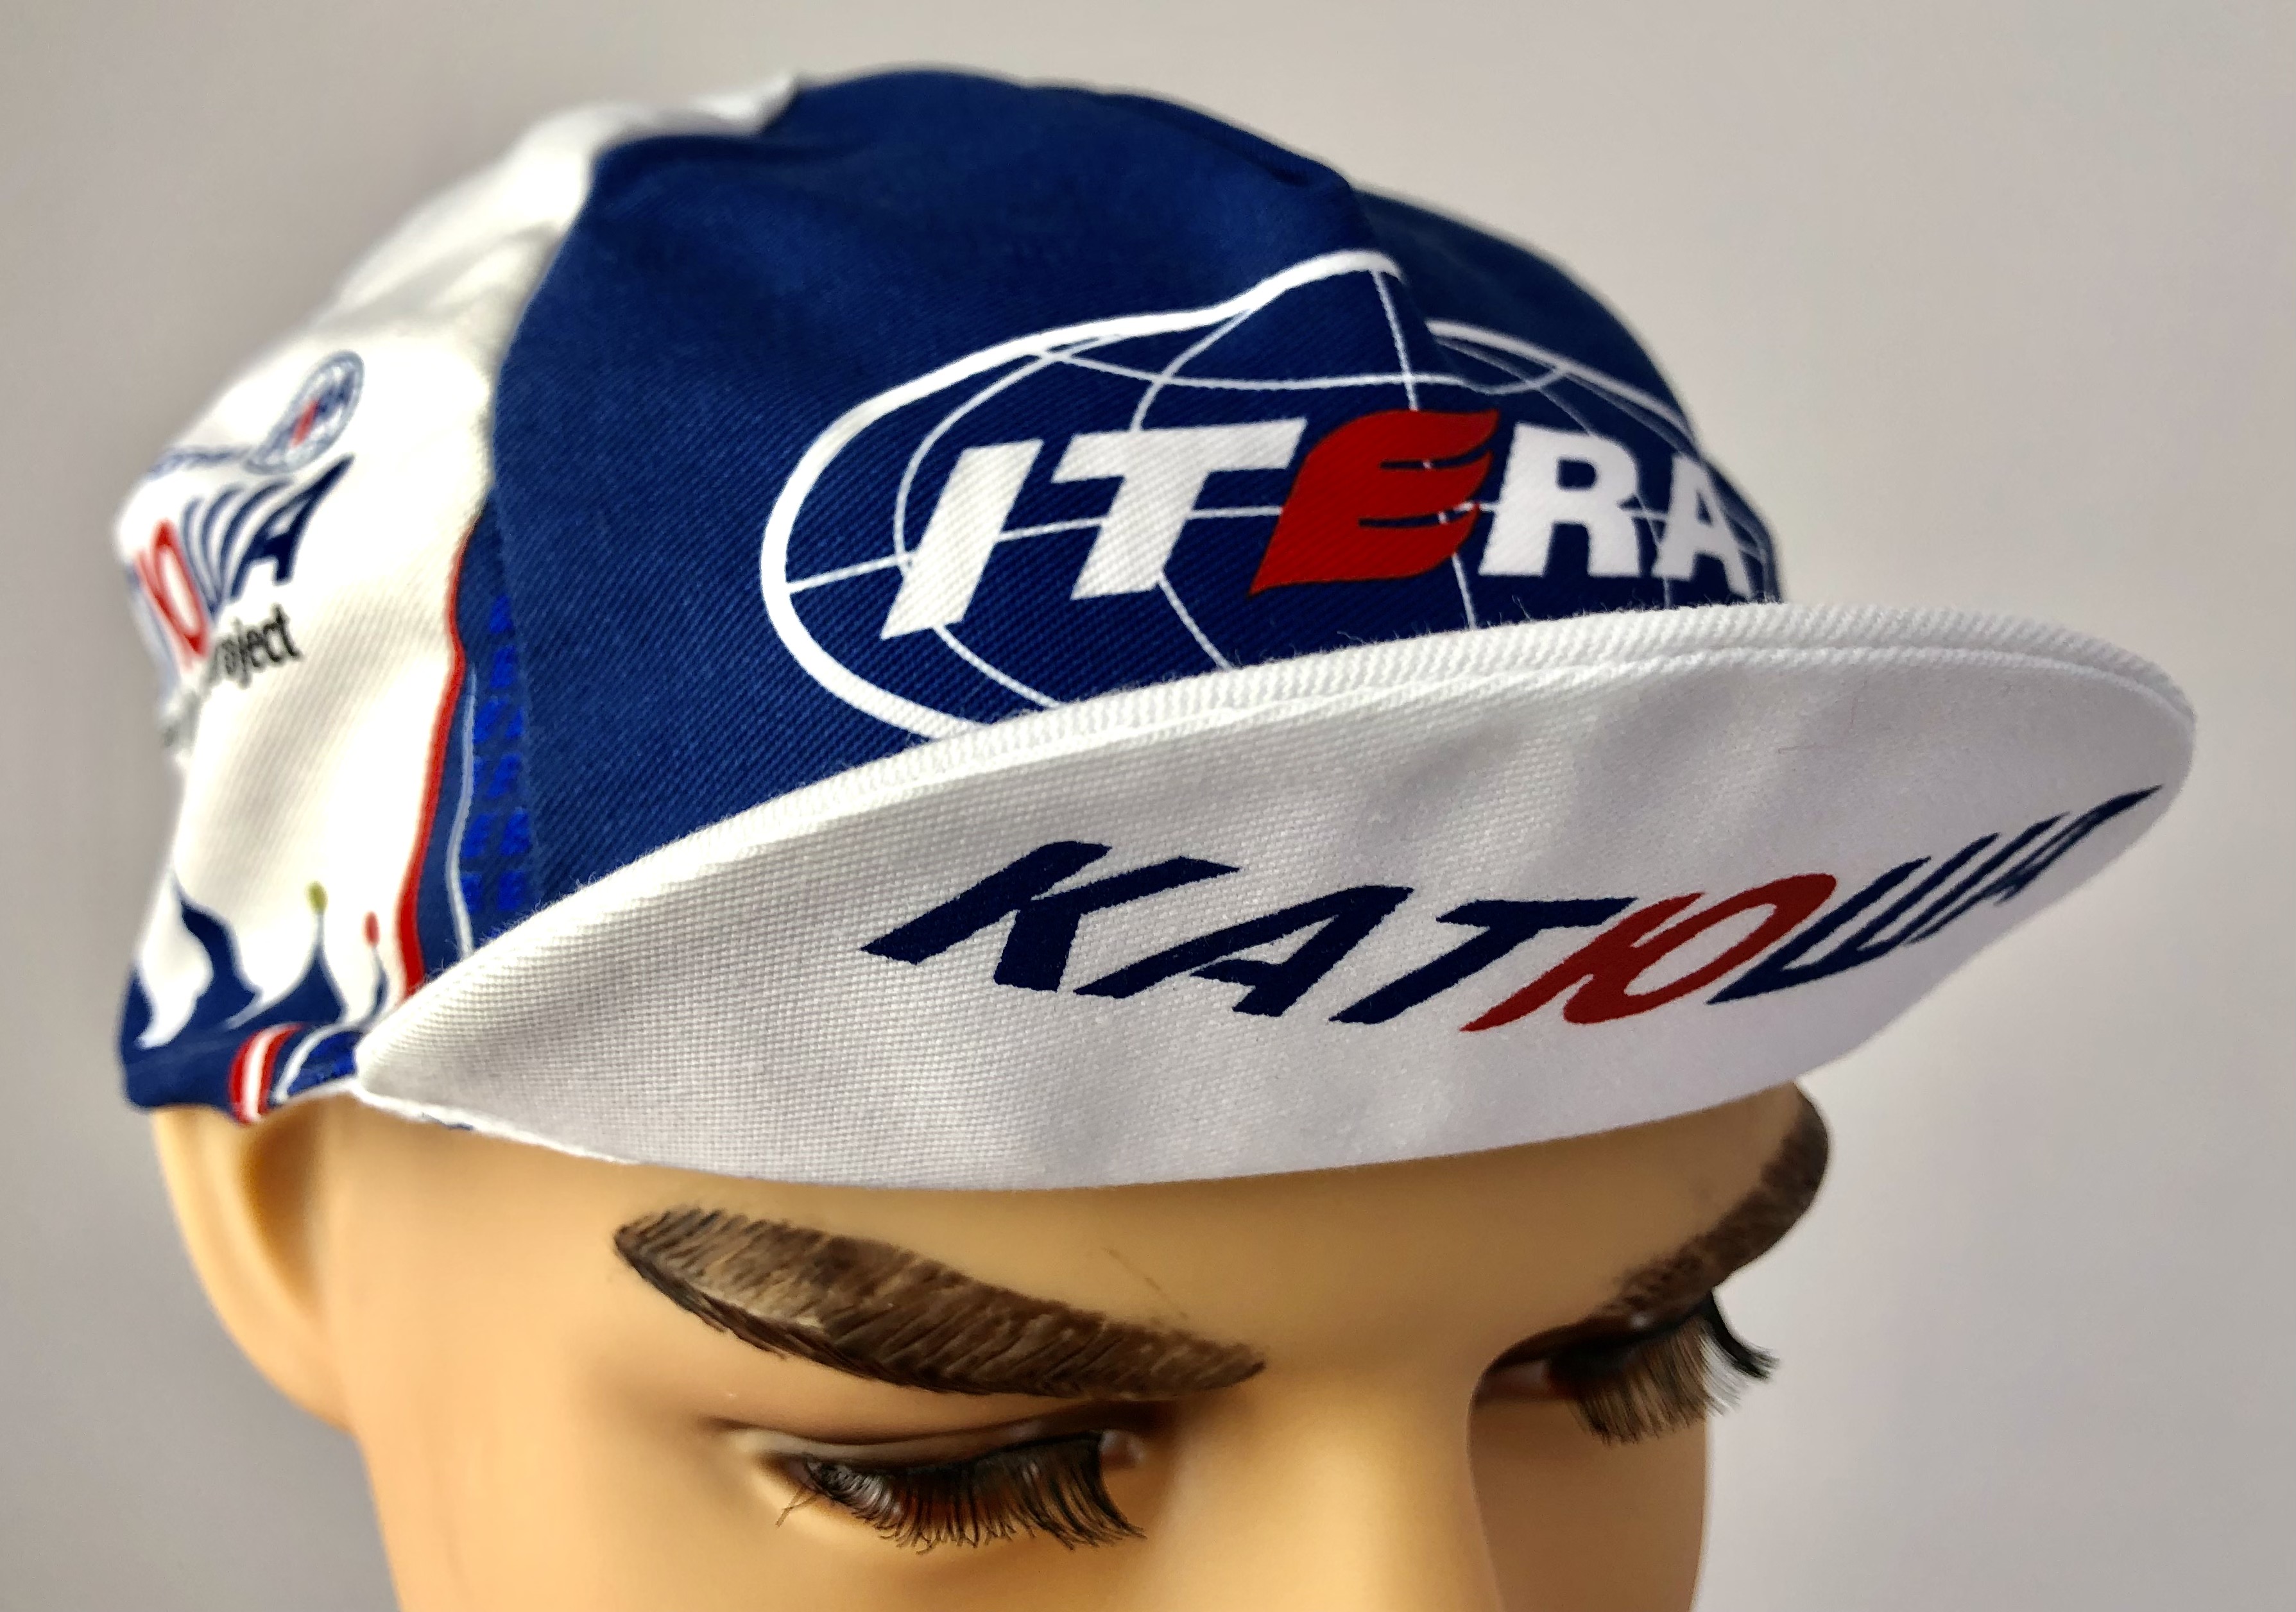 Retro Radsportmütze Team Katusha Itera, blau / weiß